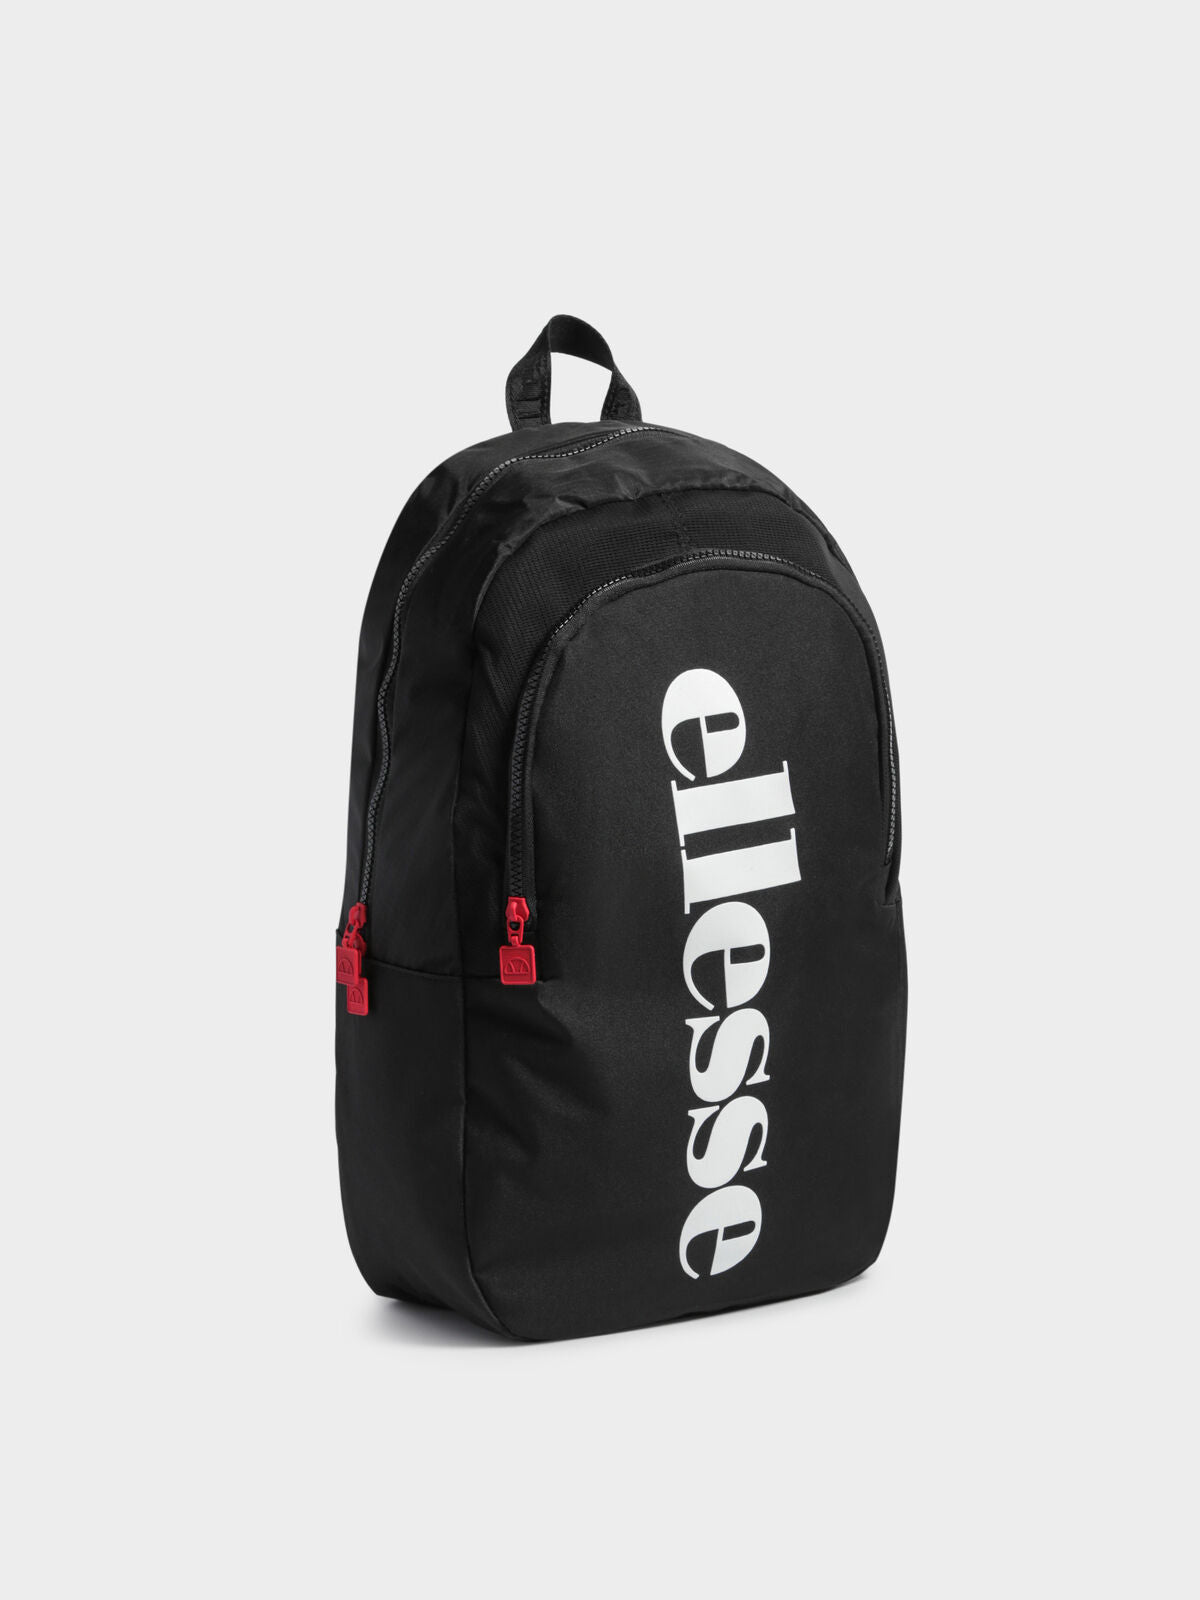 Borgo Laptop Backpack in Black